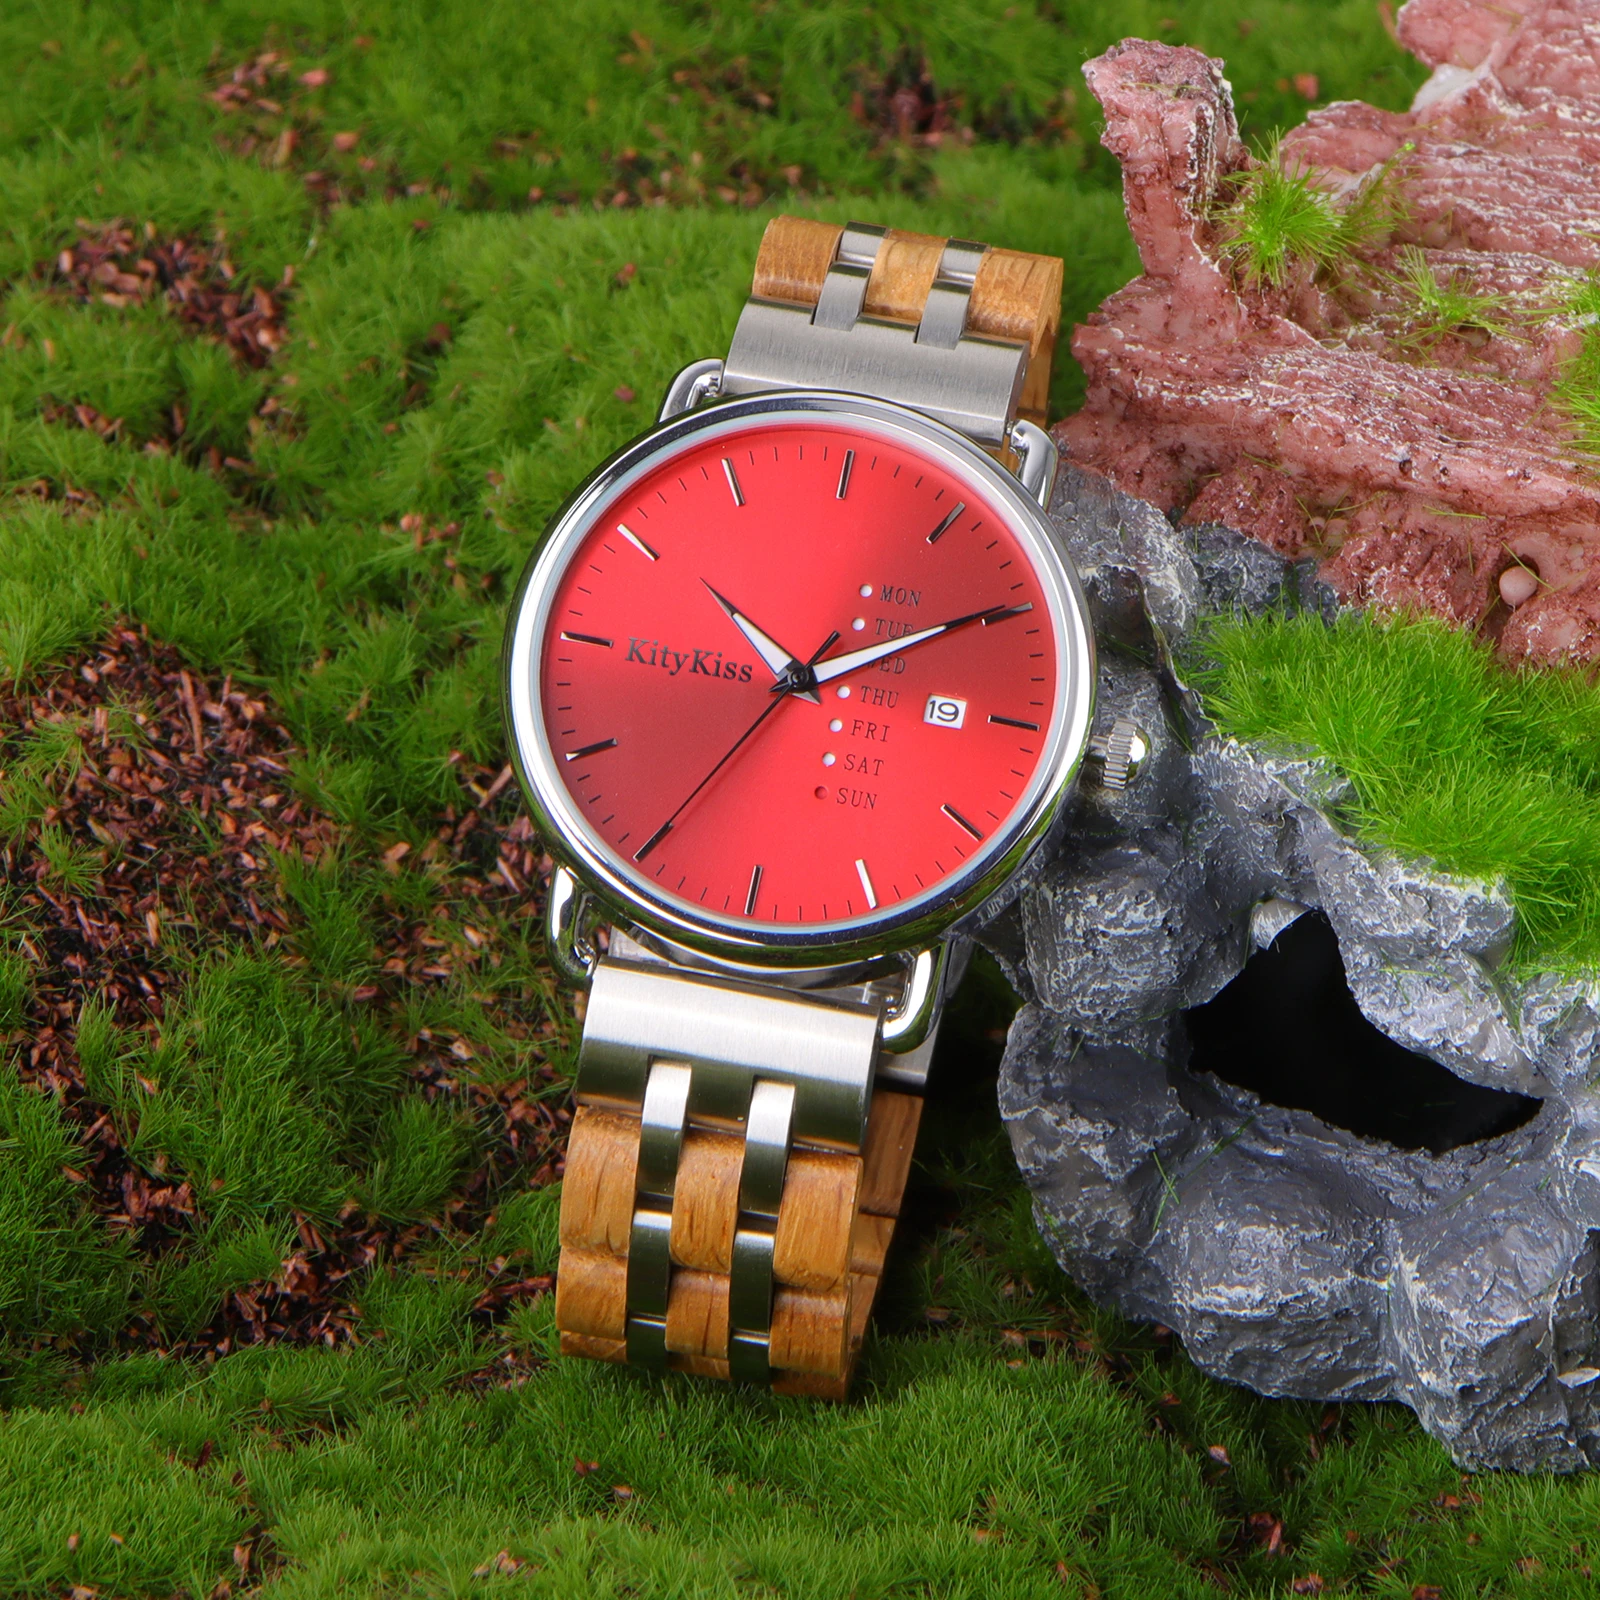 

kitykiss new stainless steel olive wood Watch Business ladies waterproof watch Calendar glow-in pointer wood watch red